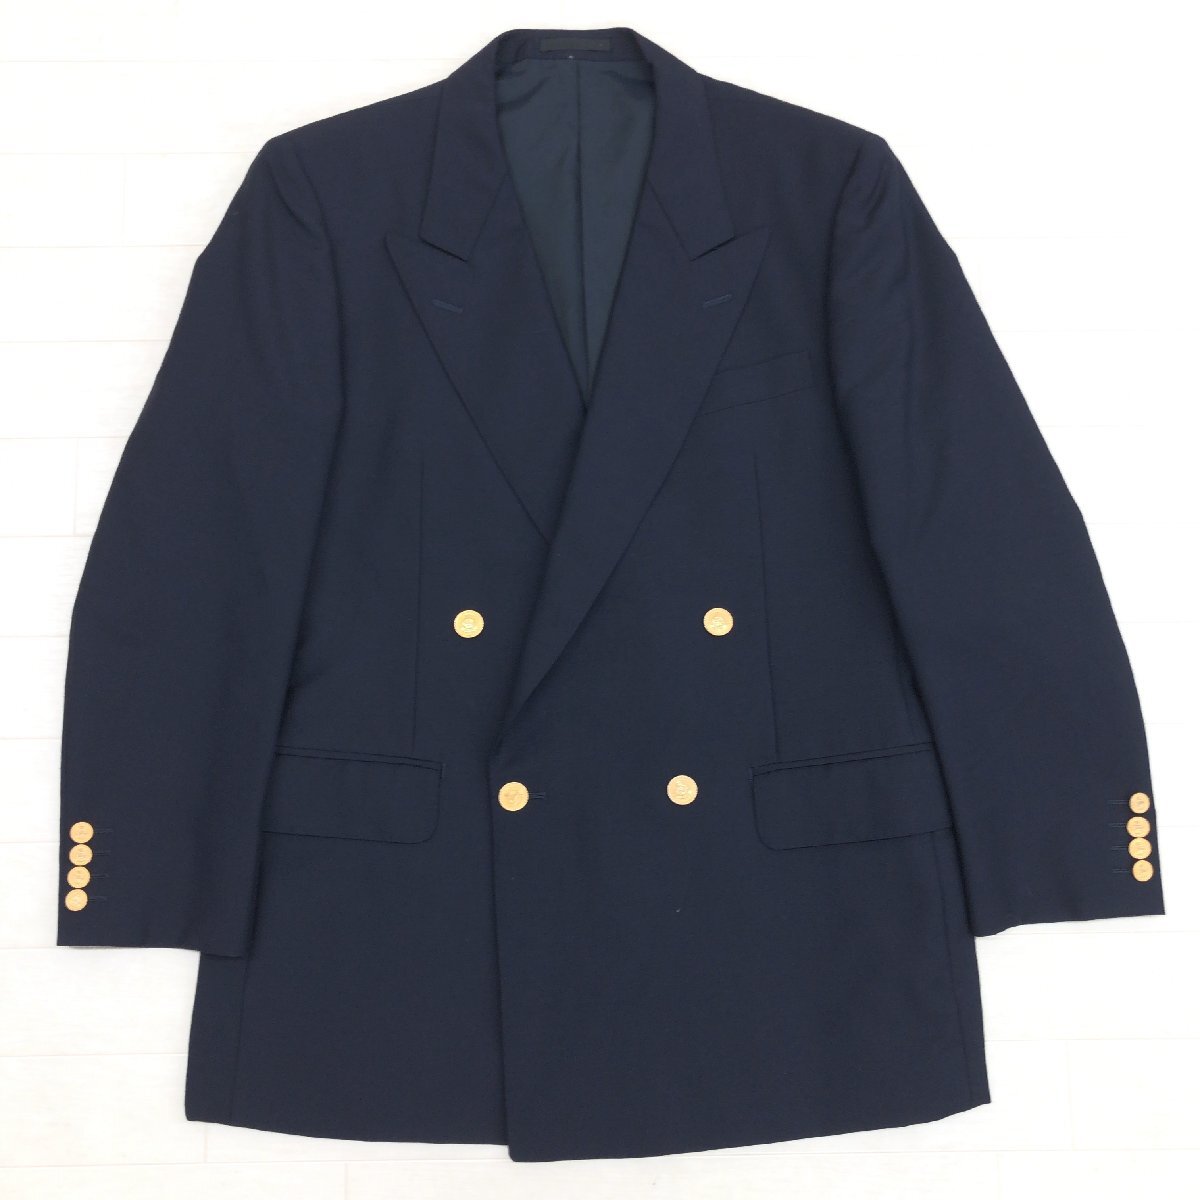 *BURBERRYS\' Burberry z gold button moheya.da bulb leather jacket AB6(XL corresponding ) dark blue . thing navy blue blur Vintage extra-large large 2L LL